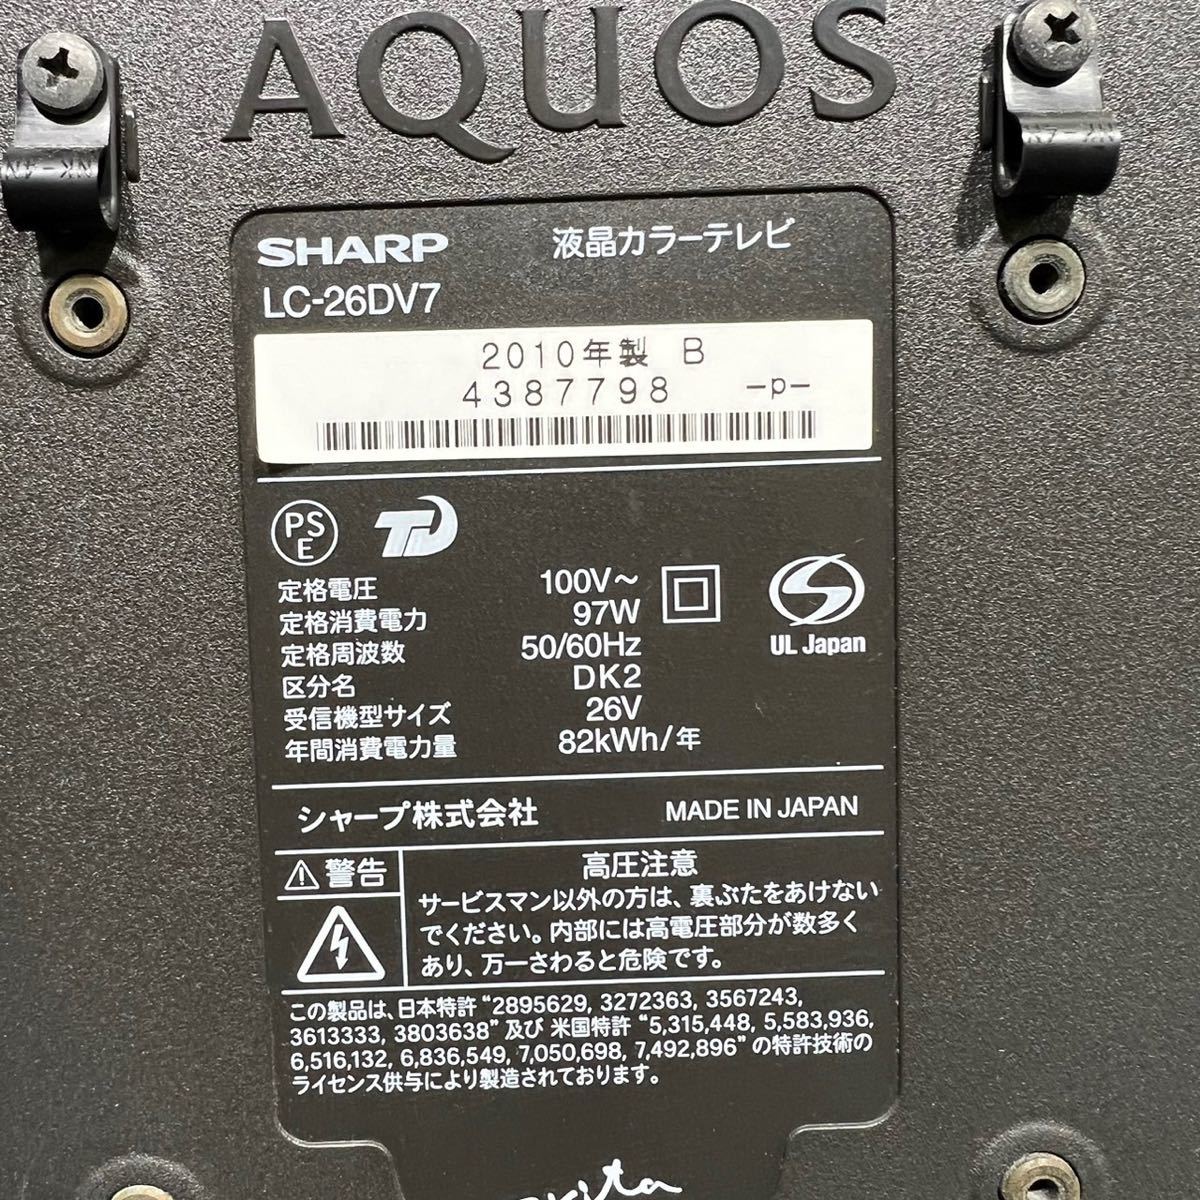 SHARP 液晶テレビ LC-26DV7 26V型 AQUOS 家電 B518